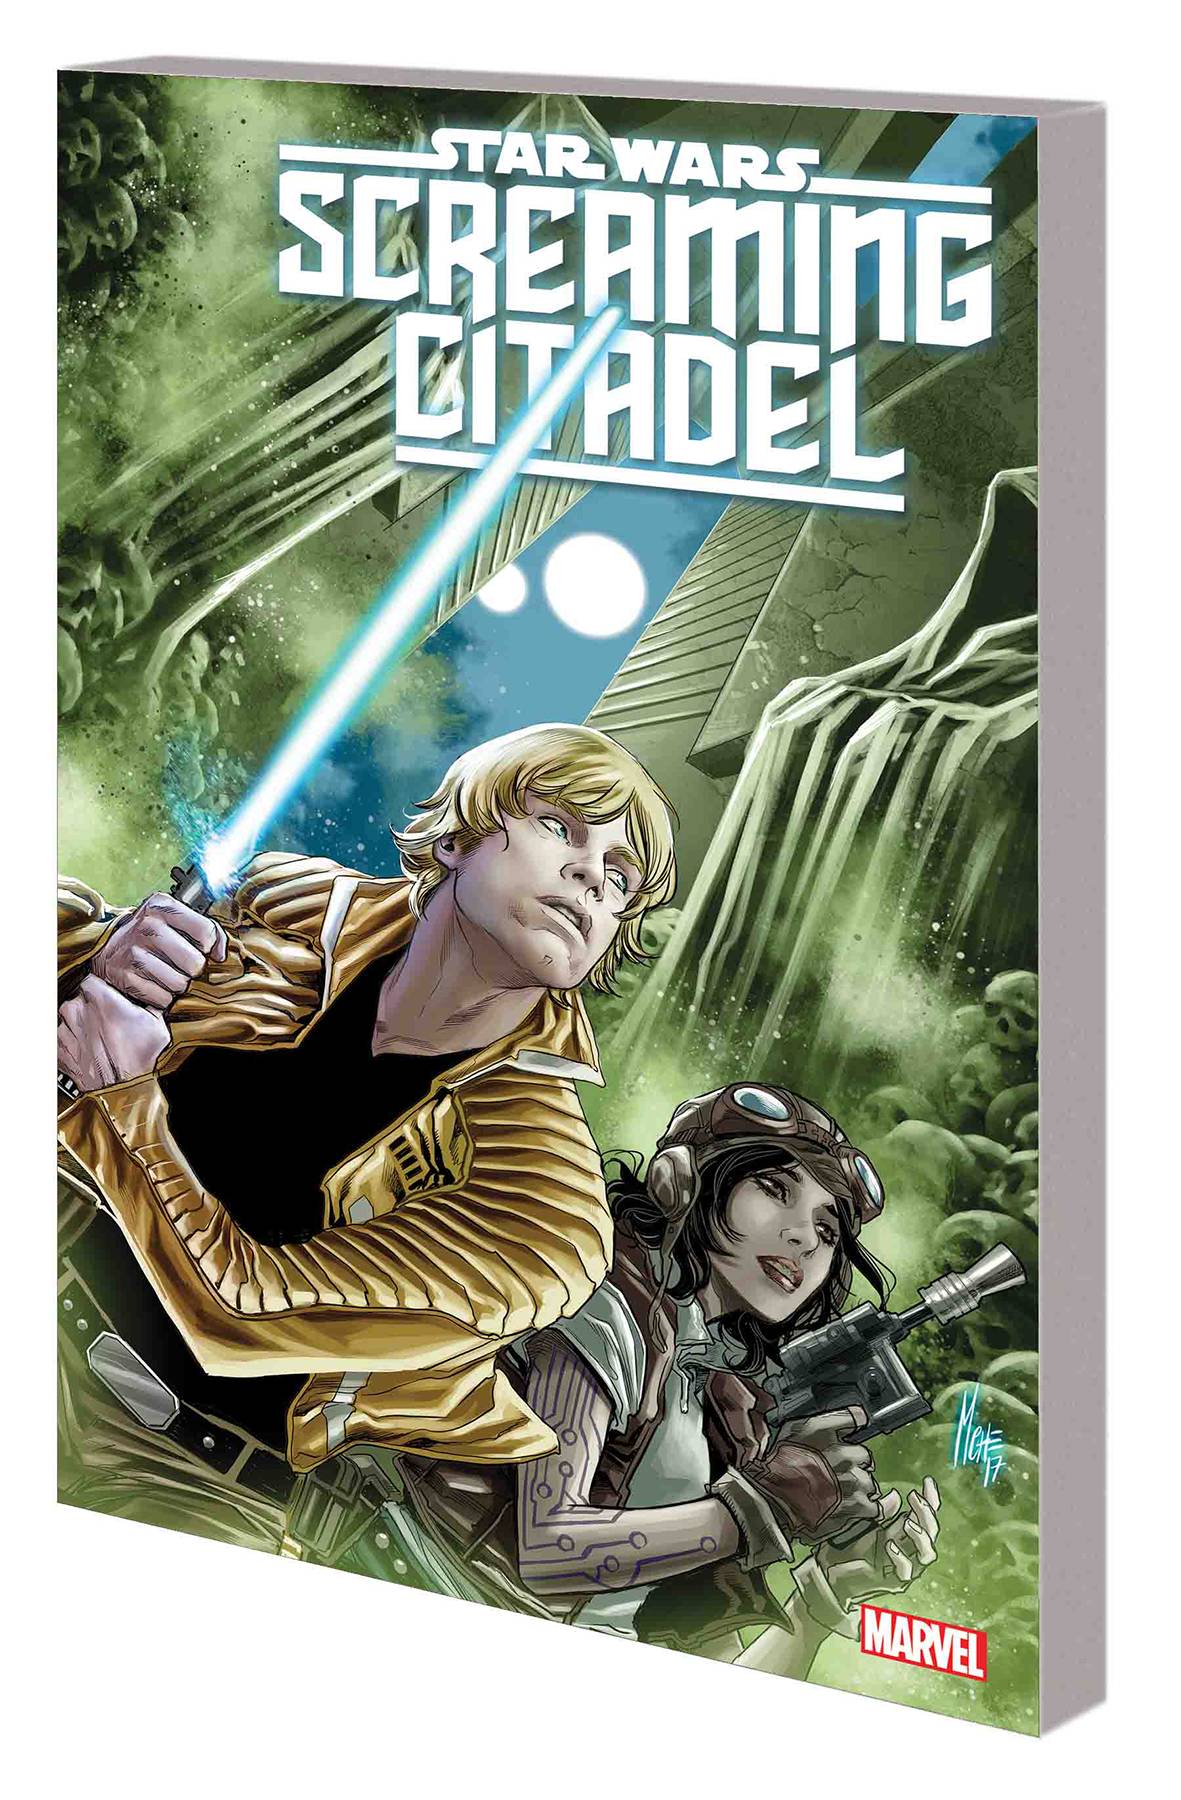 Star Wars Screaming Citadel Graphic Novel